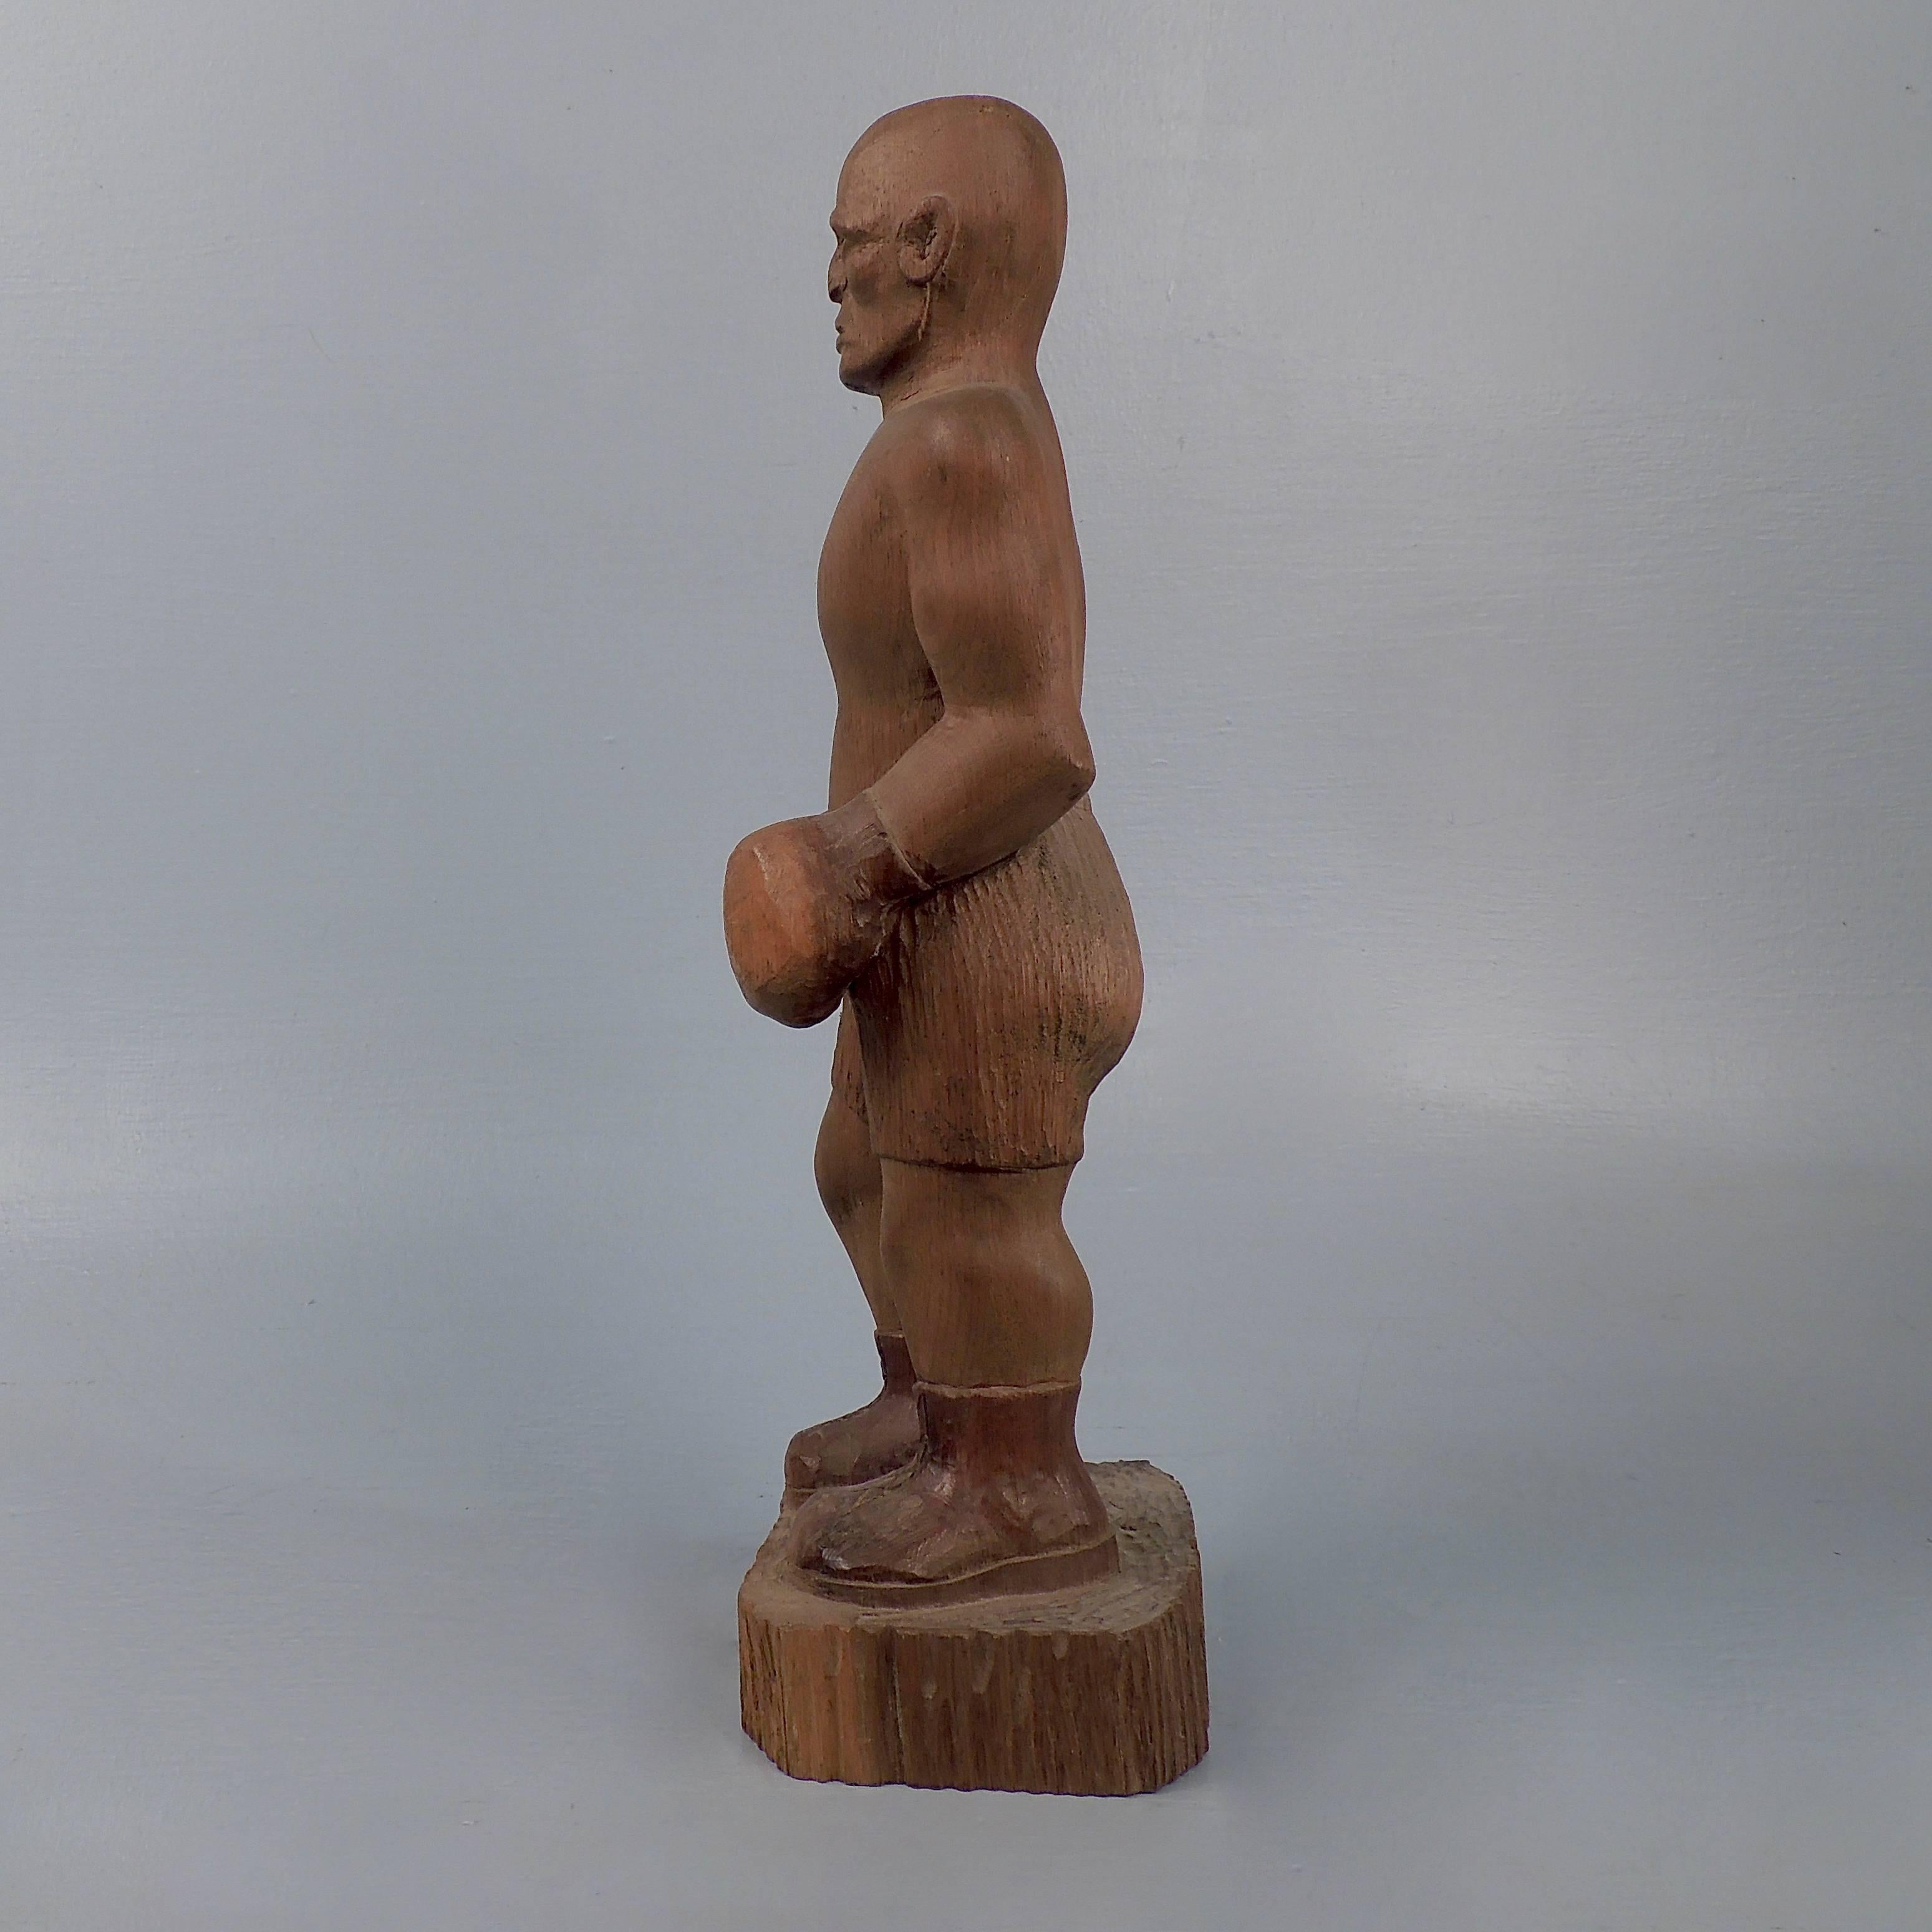 Carved Fine American Folk Art Wooden Carving or Sculpture of a Boxer or Pugilist